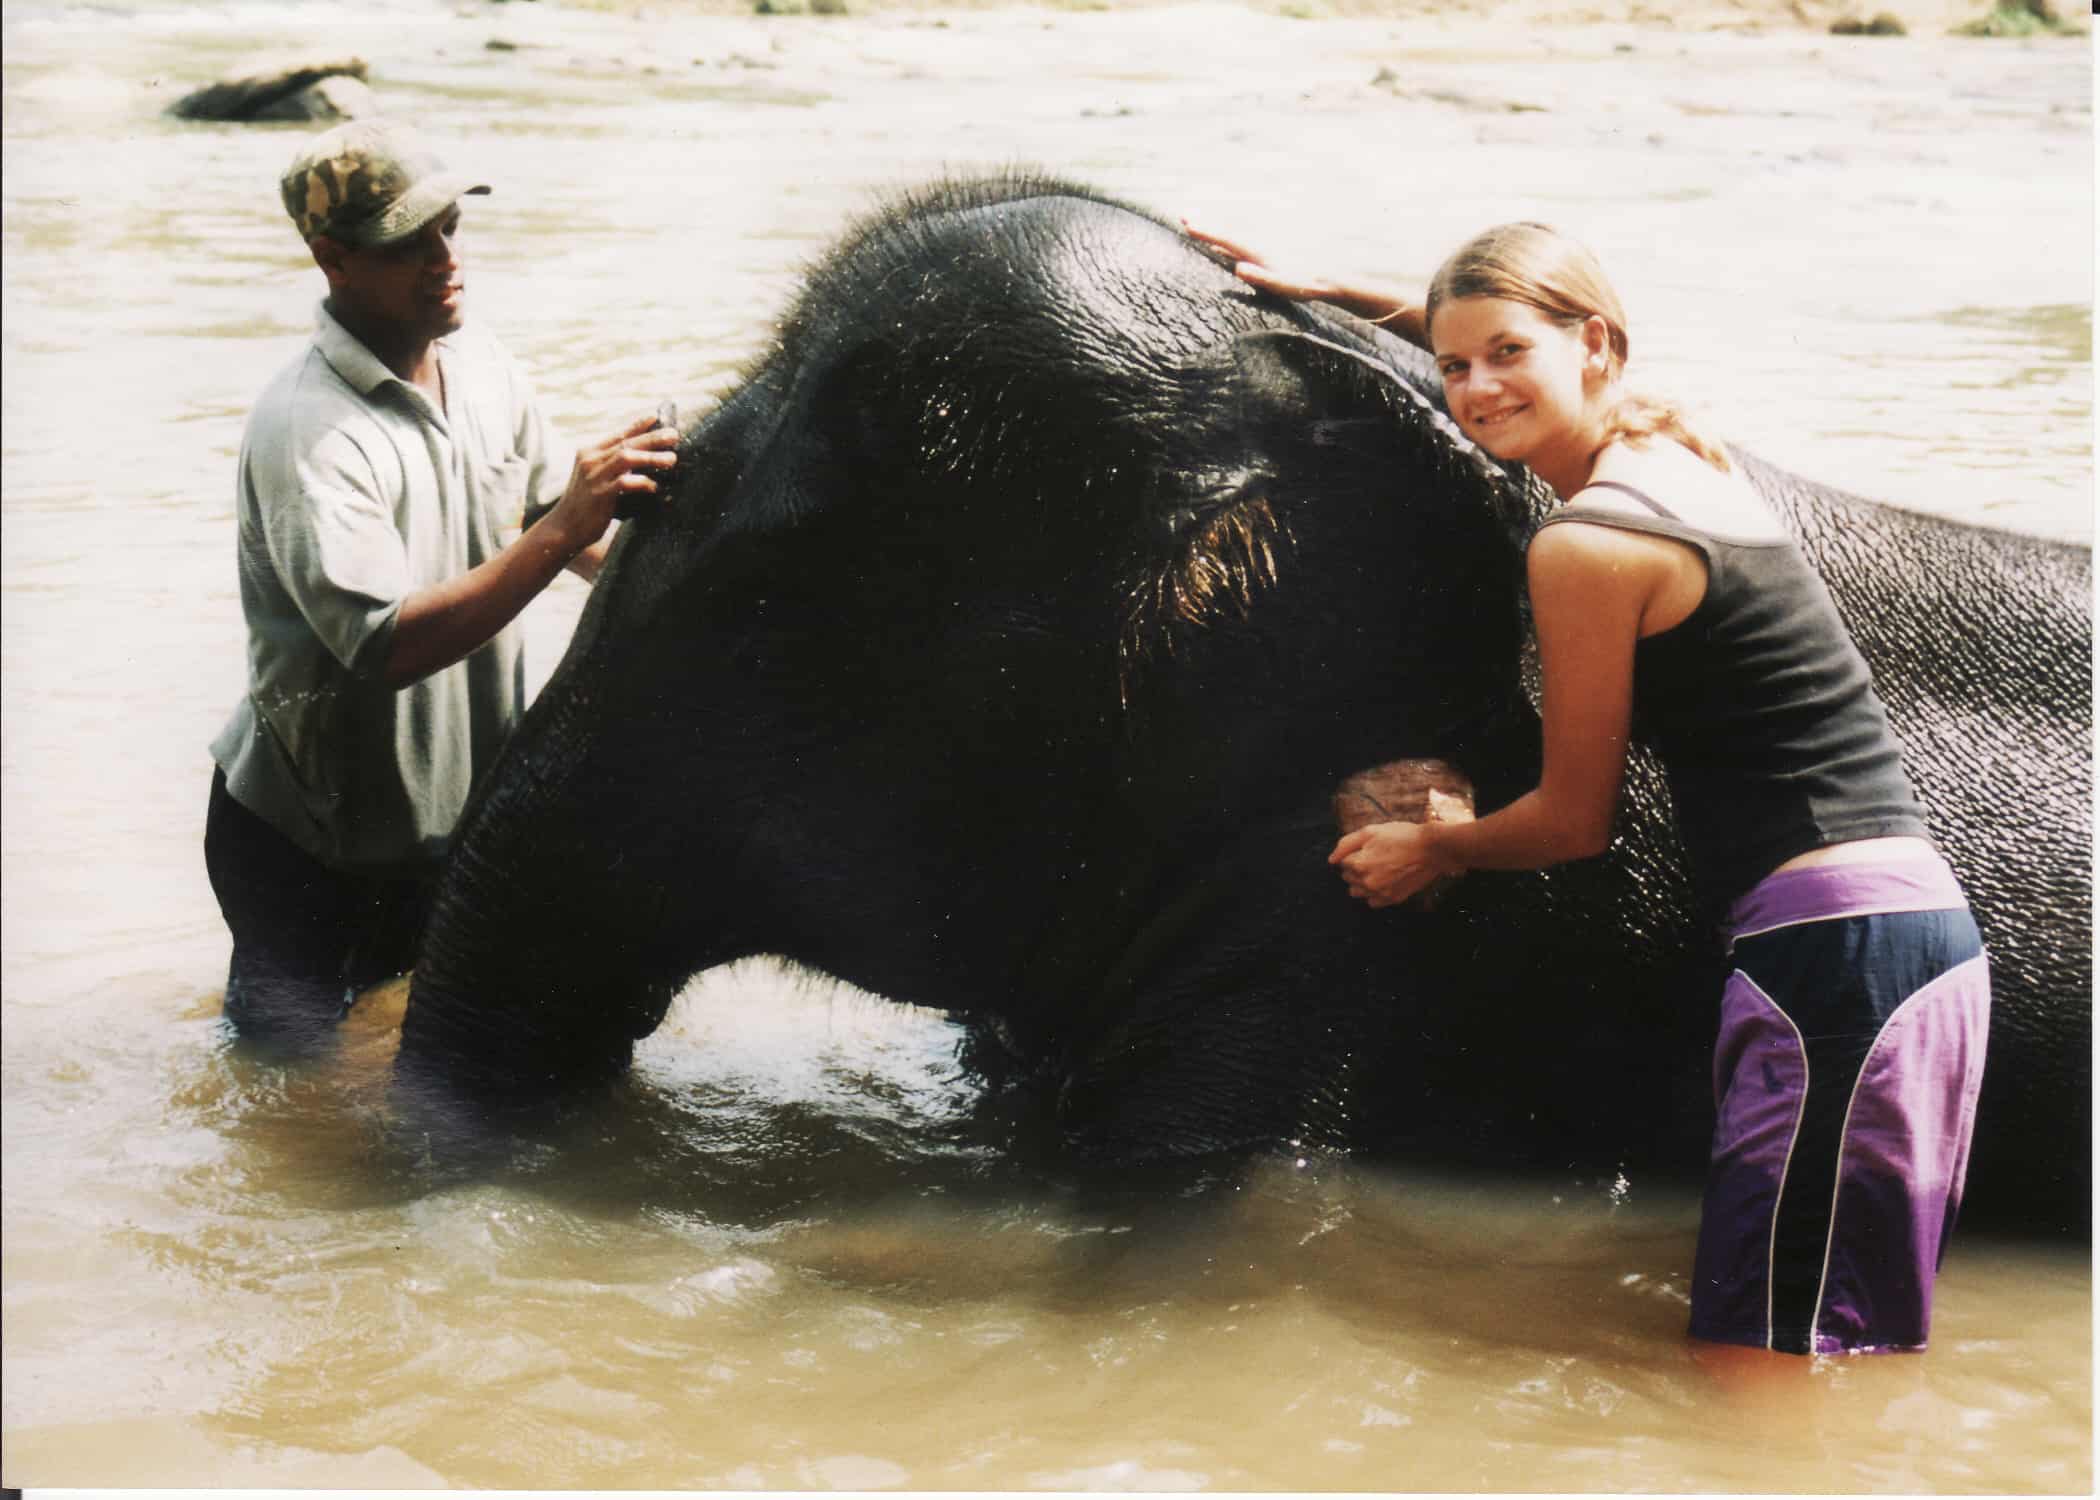 Erin volunteering at an elephant orphanage in Sri Lanka